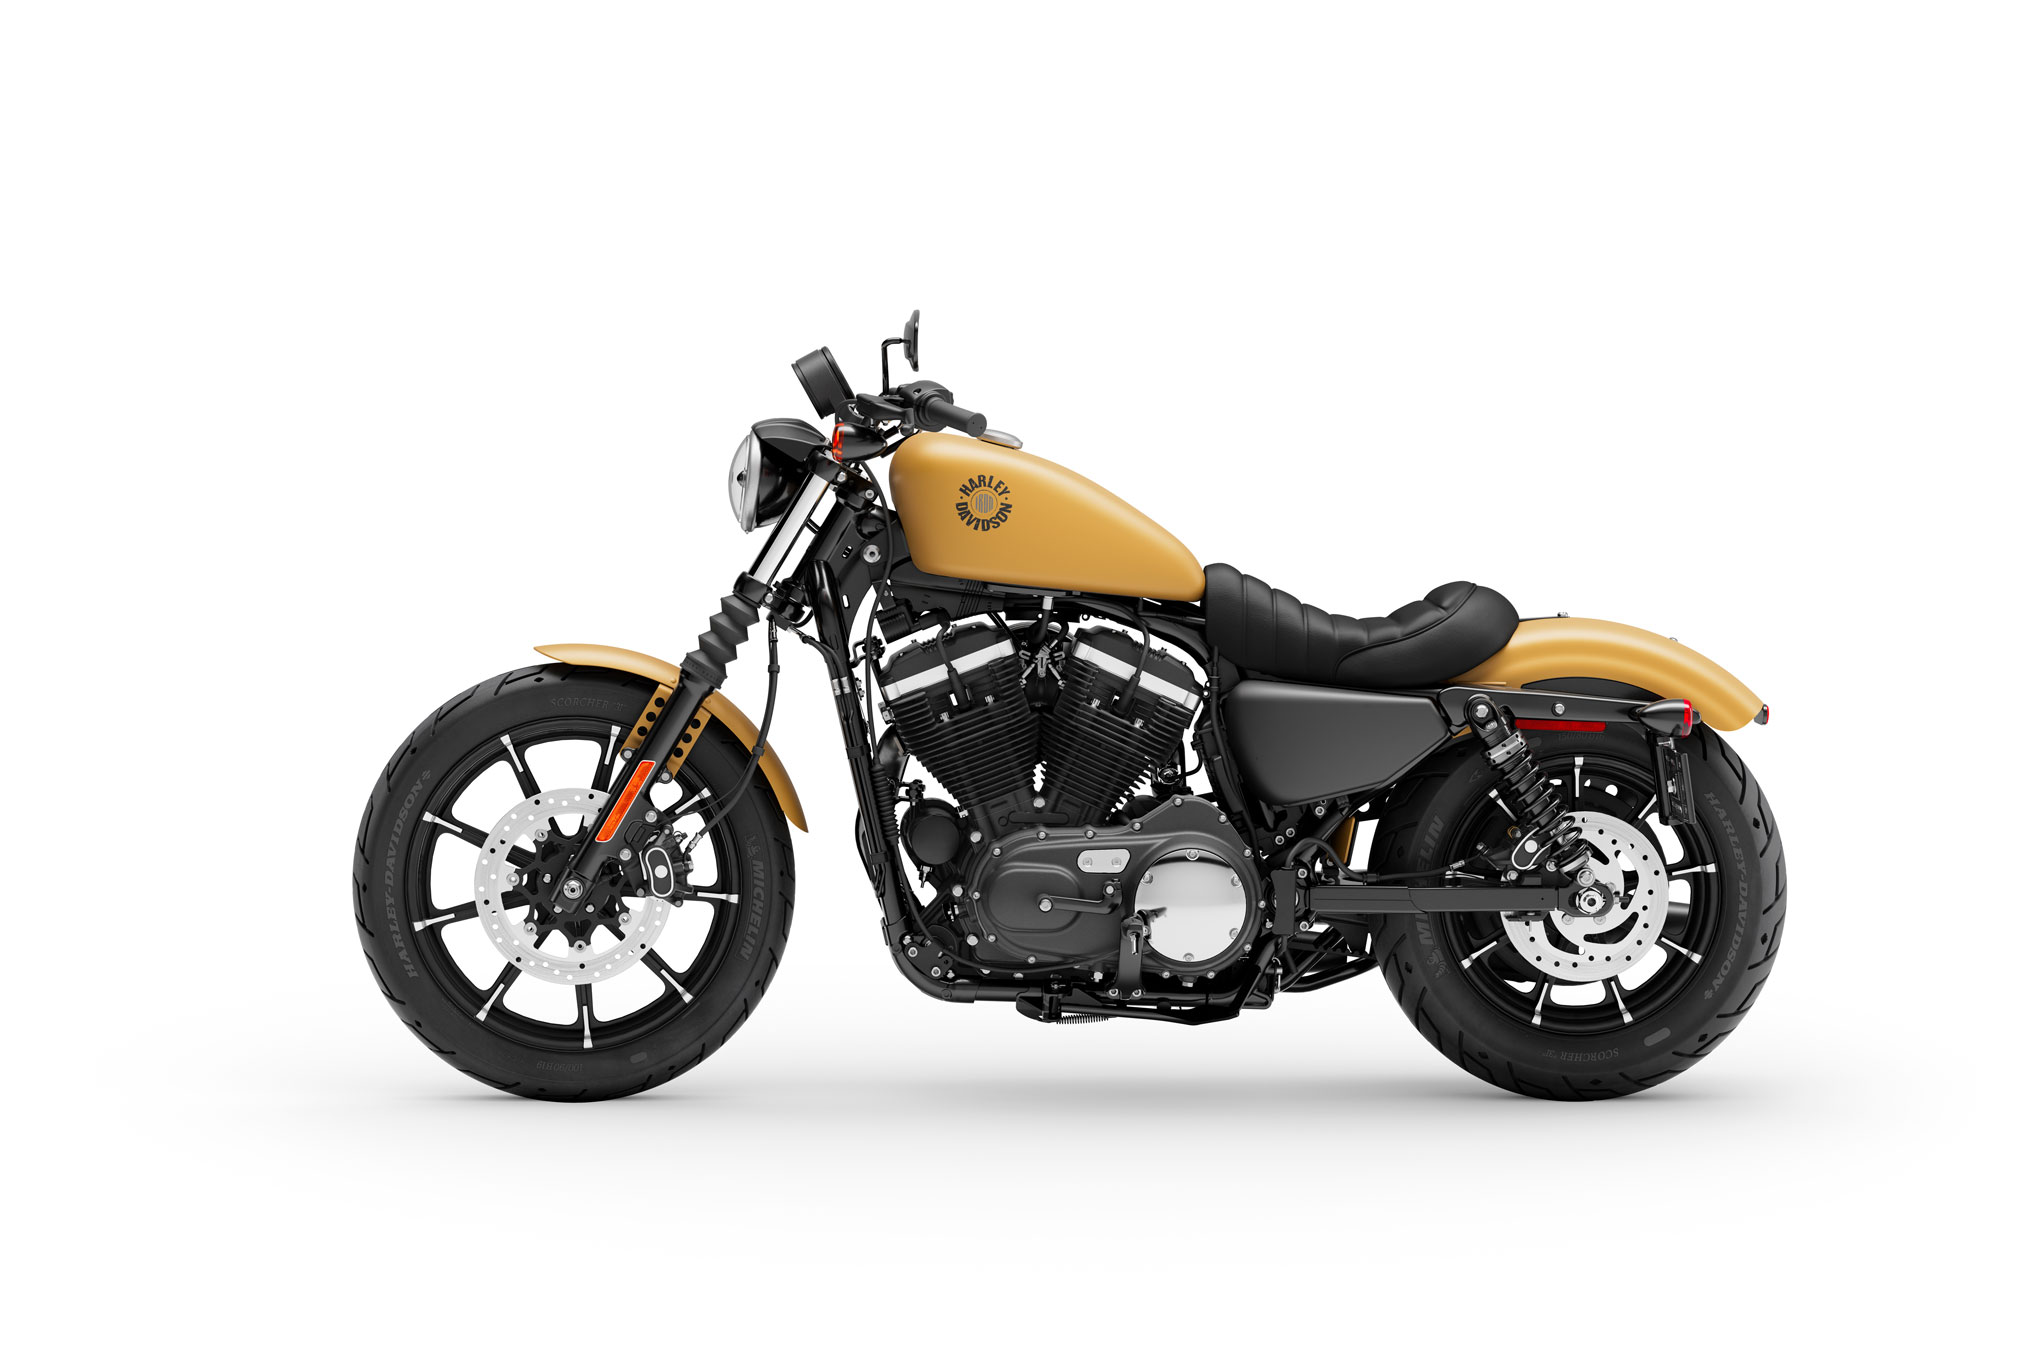 2019 Harley Davidson Iron 883 Guide Total Motorcycle